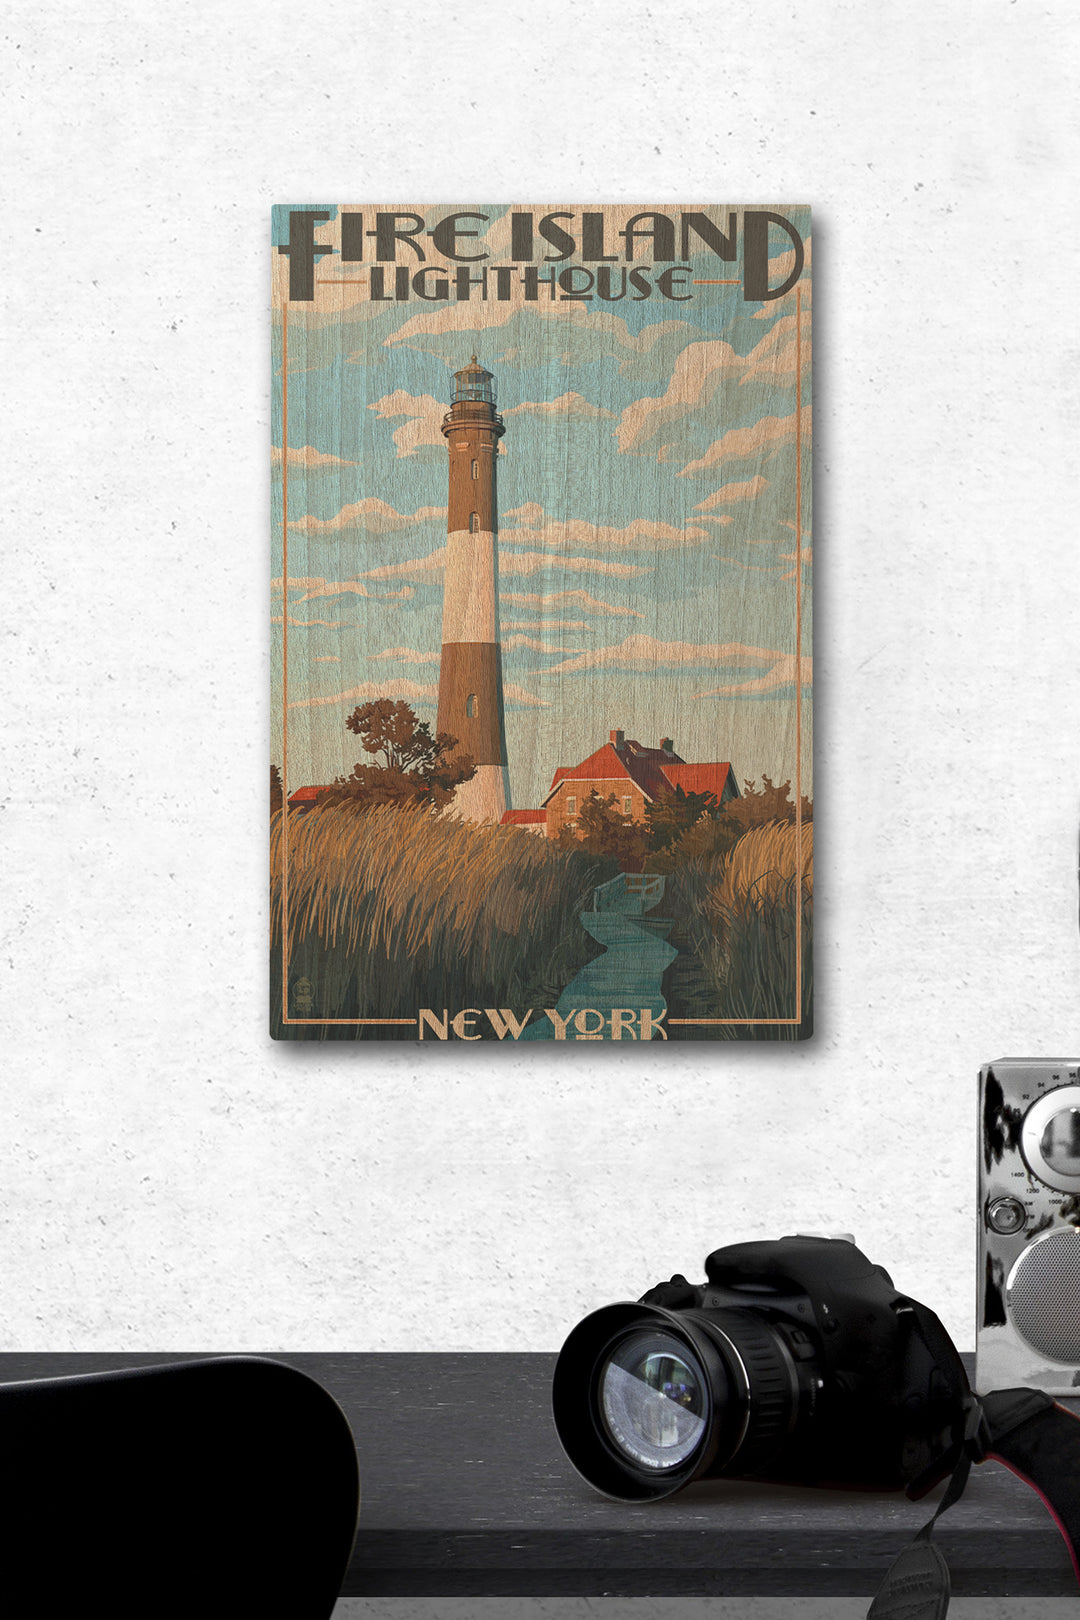 Captree Island, New York, Fire Island Lighthouses, Lantern Press Artwork, Wood Signs and Postcards